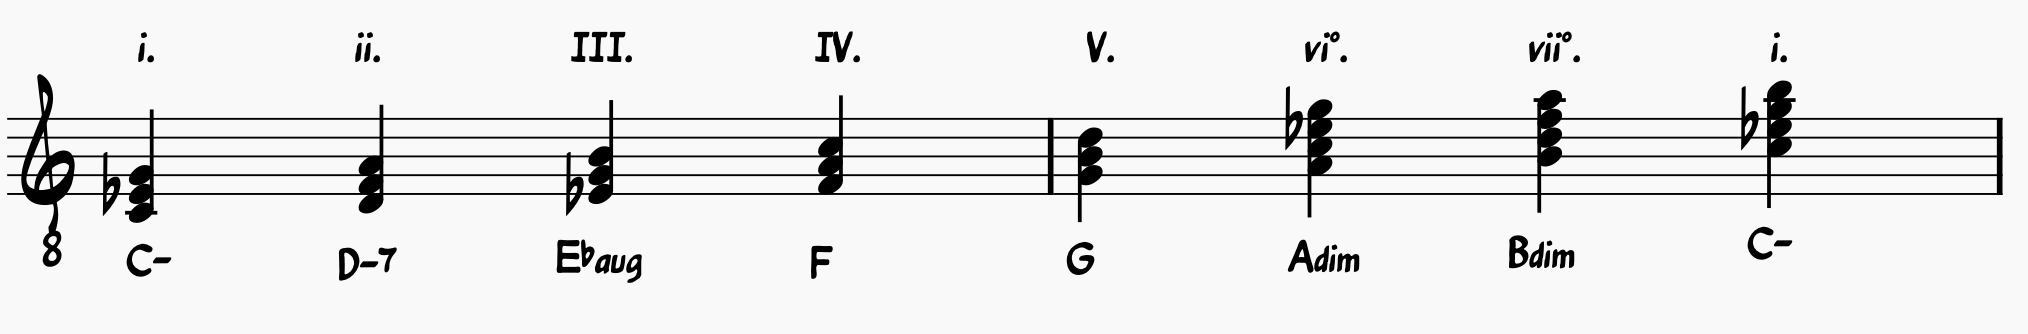 C melodic minor harmonized in triads